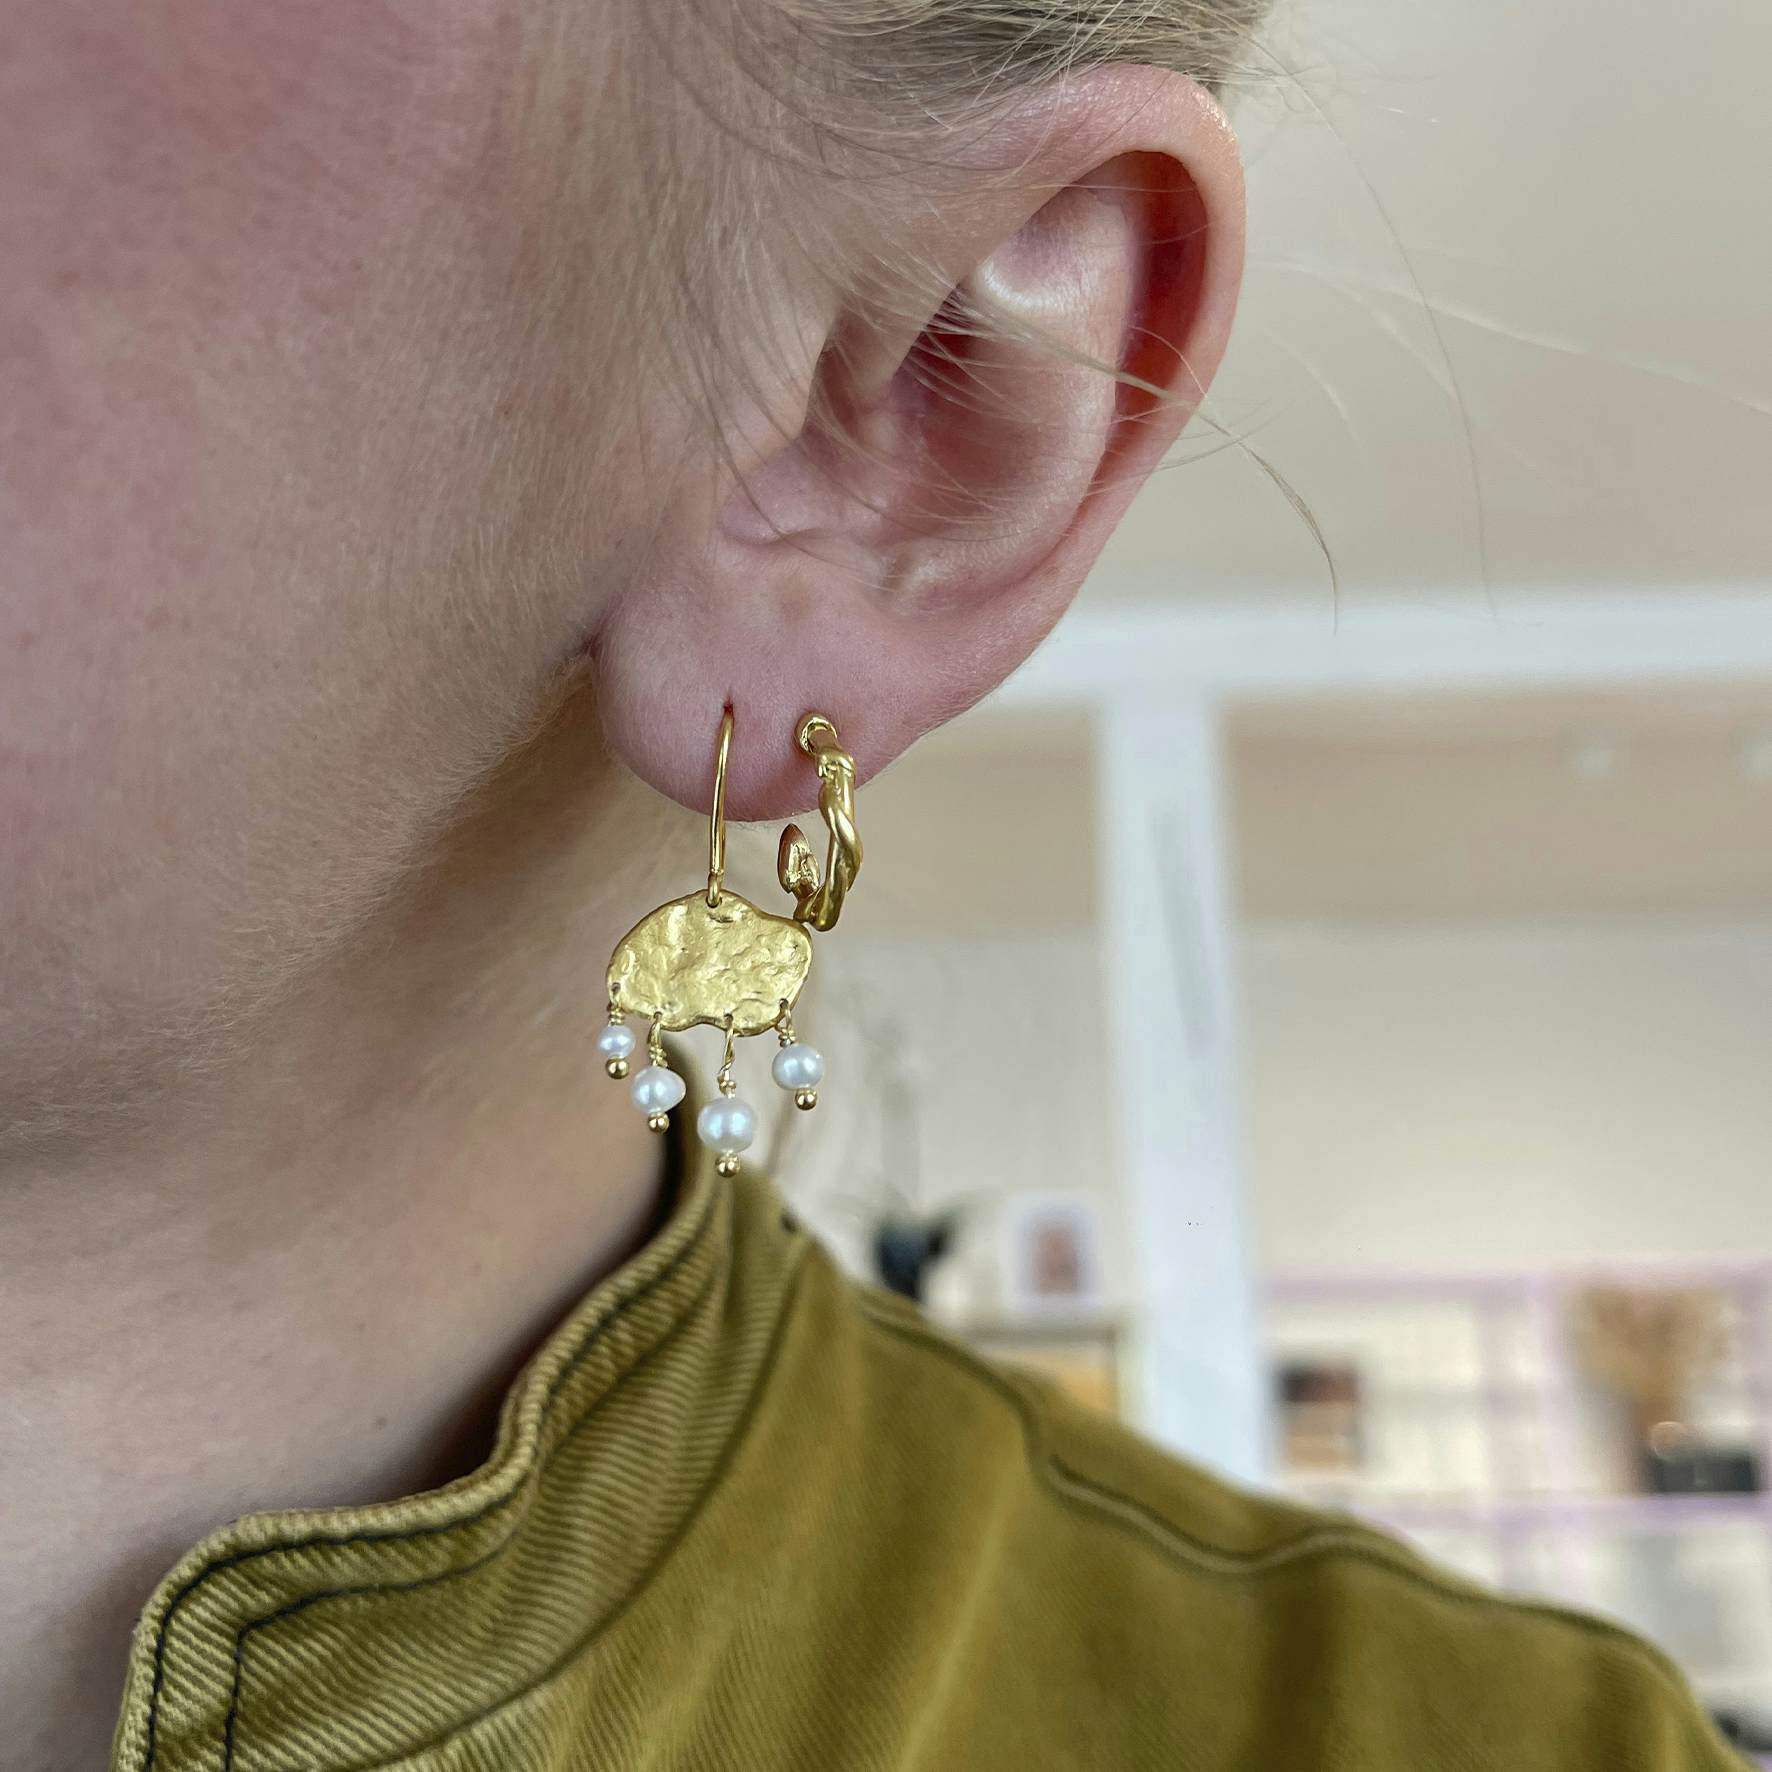 Big Gold Splash Earring – Elegant Pearls fra STINE A Jewelry i Forgylt-Sølv Sterling 925